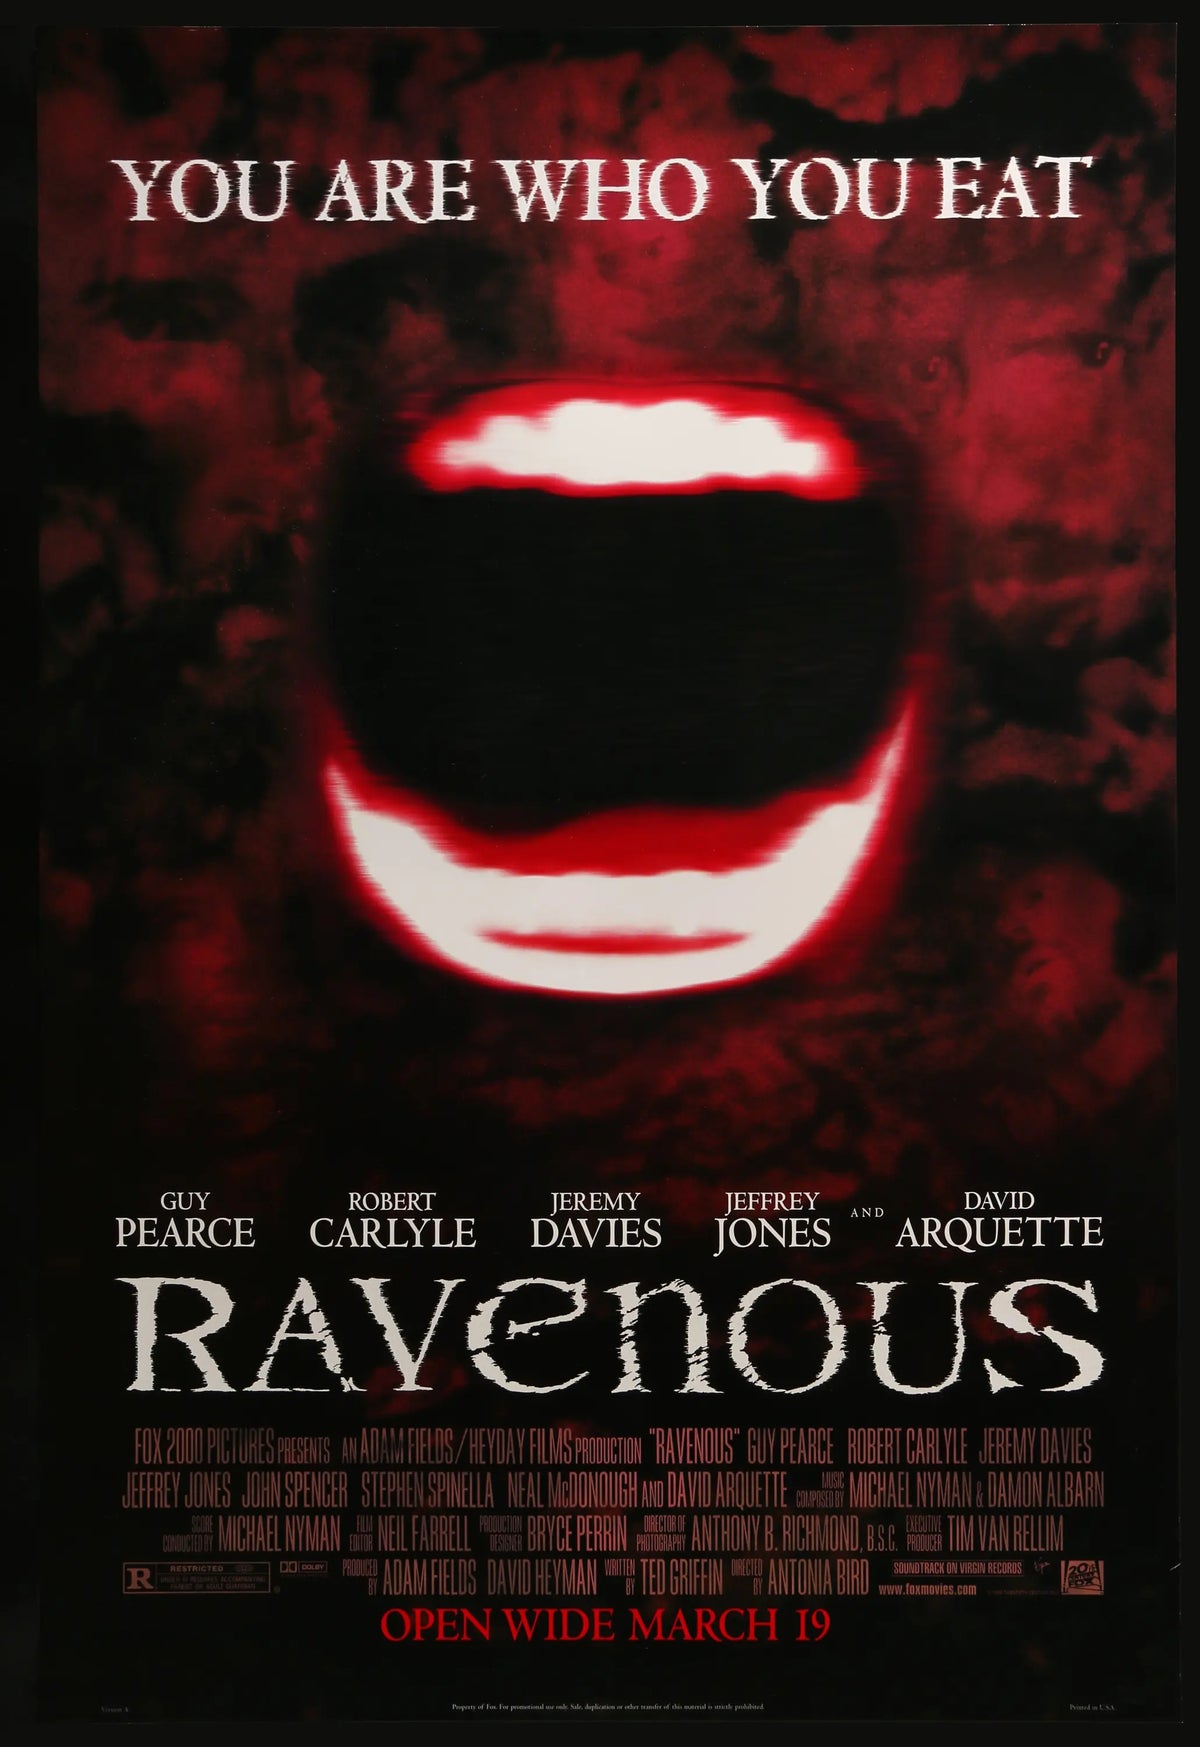 Ravenous (1999) original movie poster for sale at Original Film Art